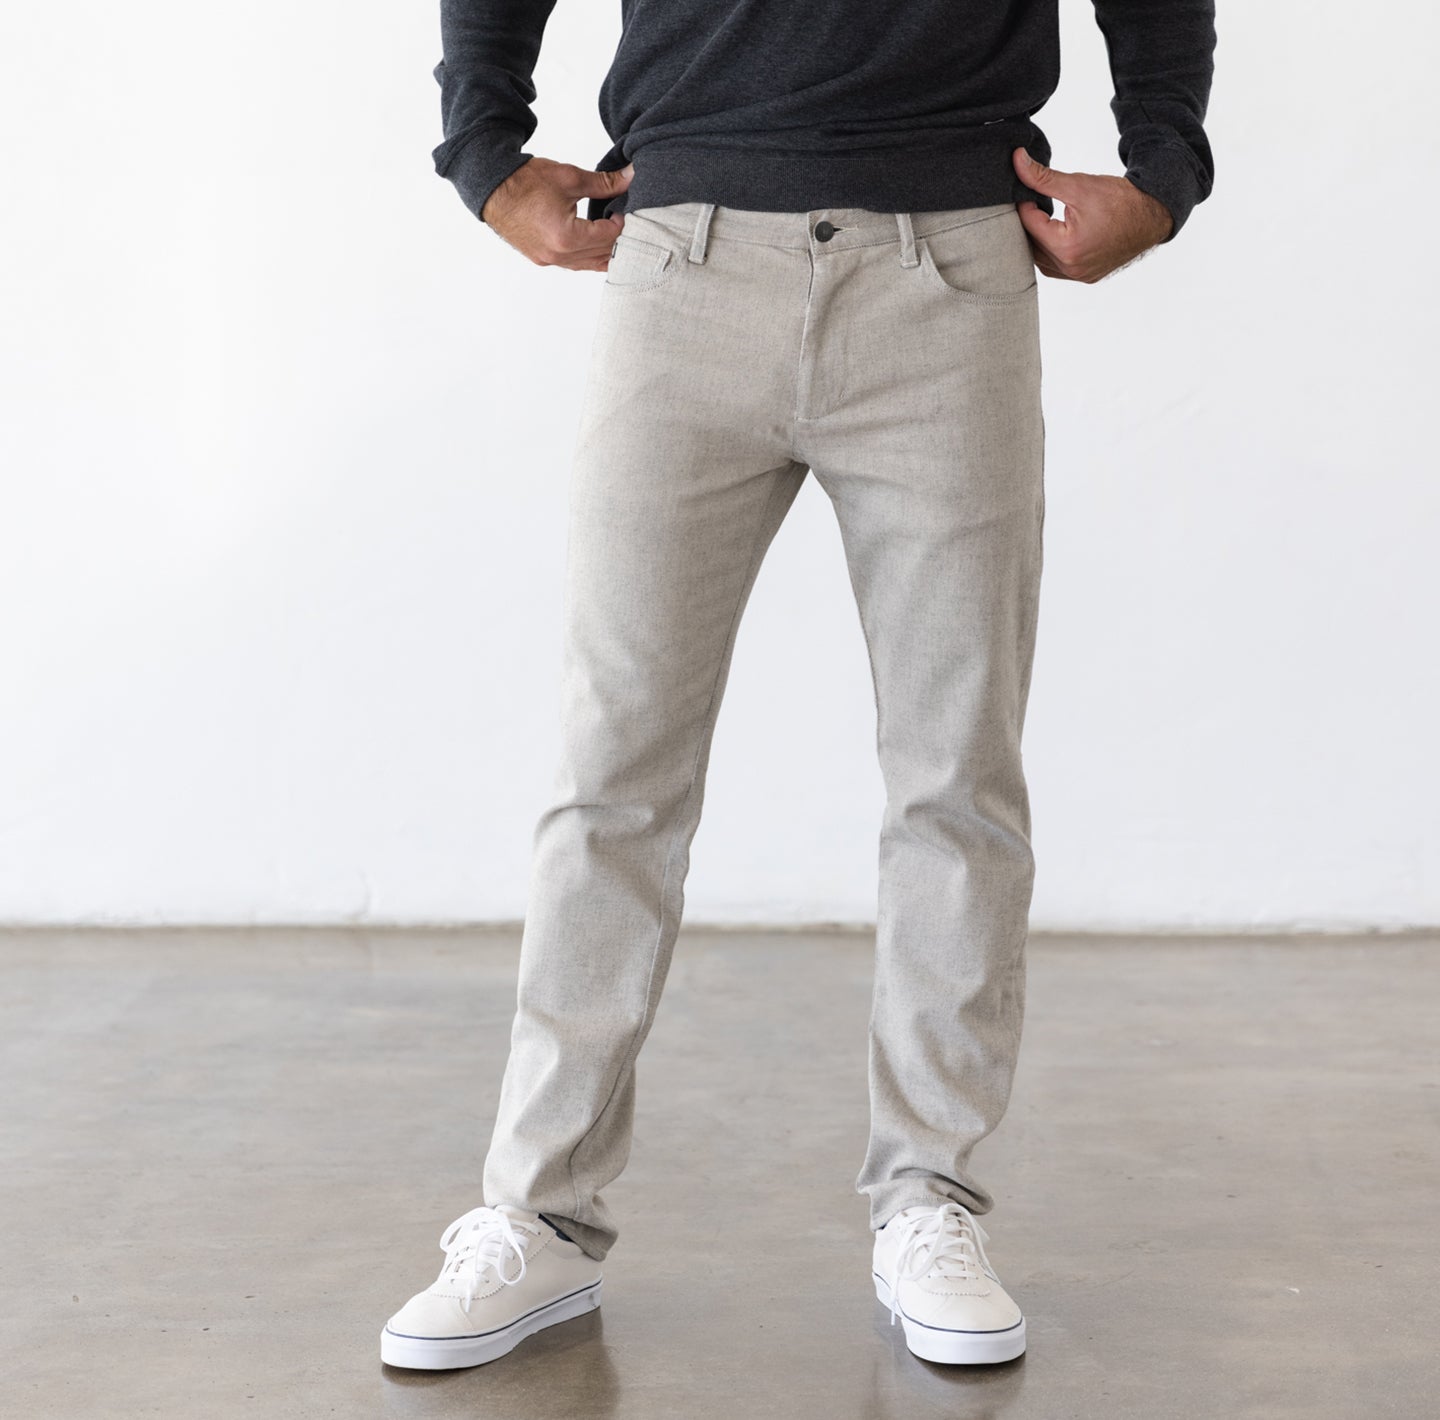 Levi's Men's 510 Slim Fit Skinny Leg Cotton Denim Jeans Pants Colored -  Shopping.com